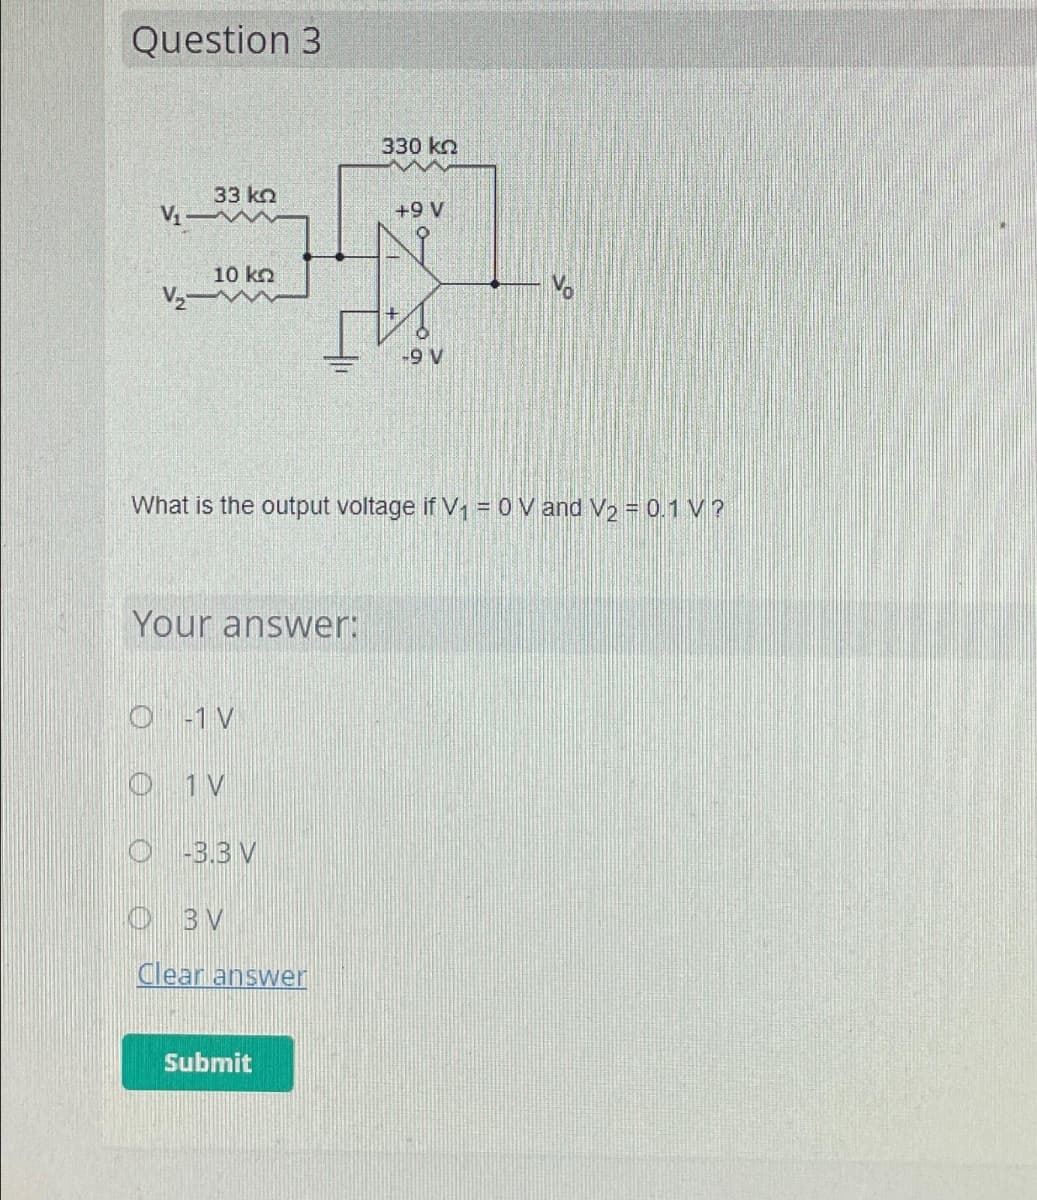 Question 3
330 ΚΩ
33 ΚΩ
+9 V
H
10 ΚΩ
-9 V
V₁-
V₂-
What is the output voltage if V₁ = 0 V and V₂ = 0.1 V?
Your answer:
O-1 V
O 1 V
O-3.3 V
OBV
Clear answer
Submit